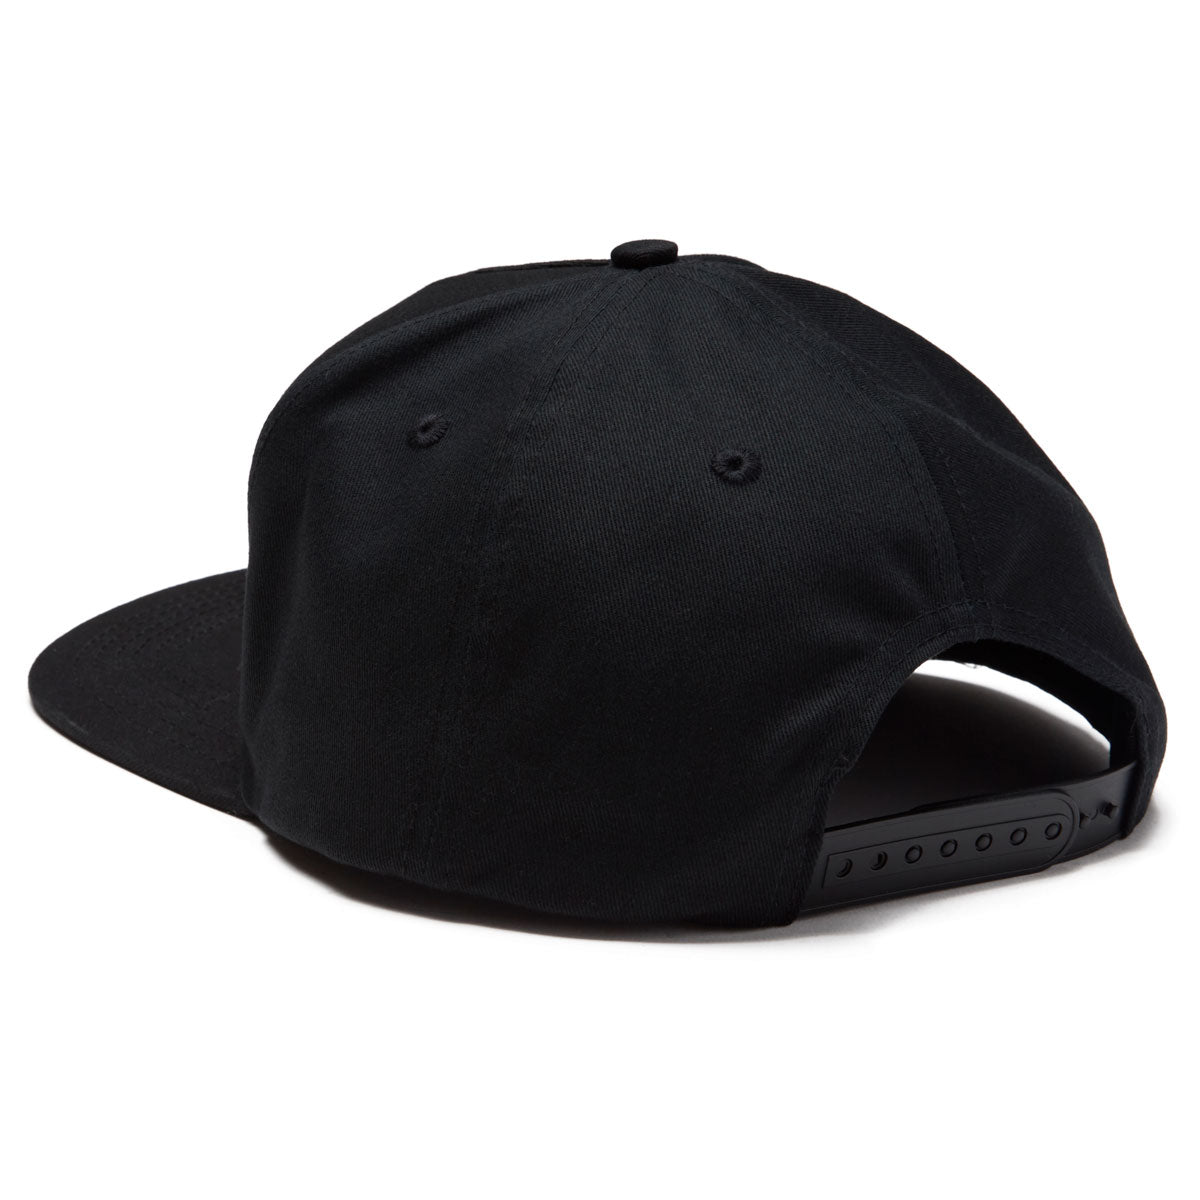 Santa Cruz Classic Snapback Mid Profile Hat - Black image 2